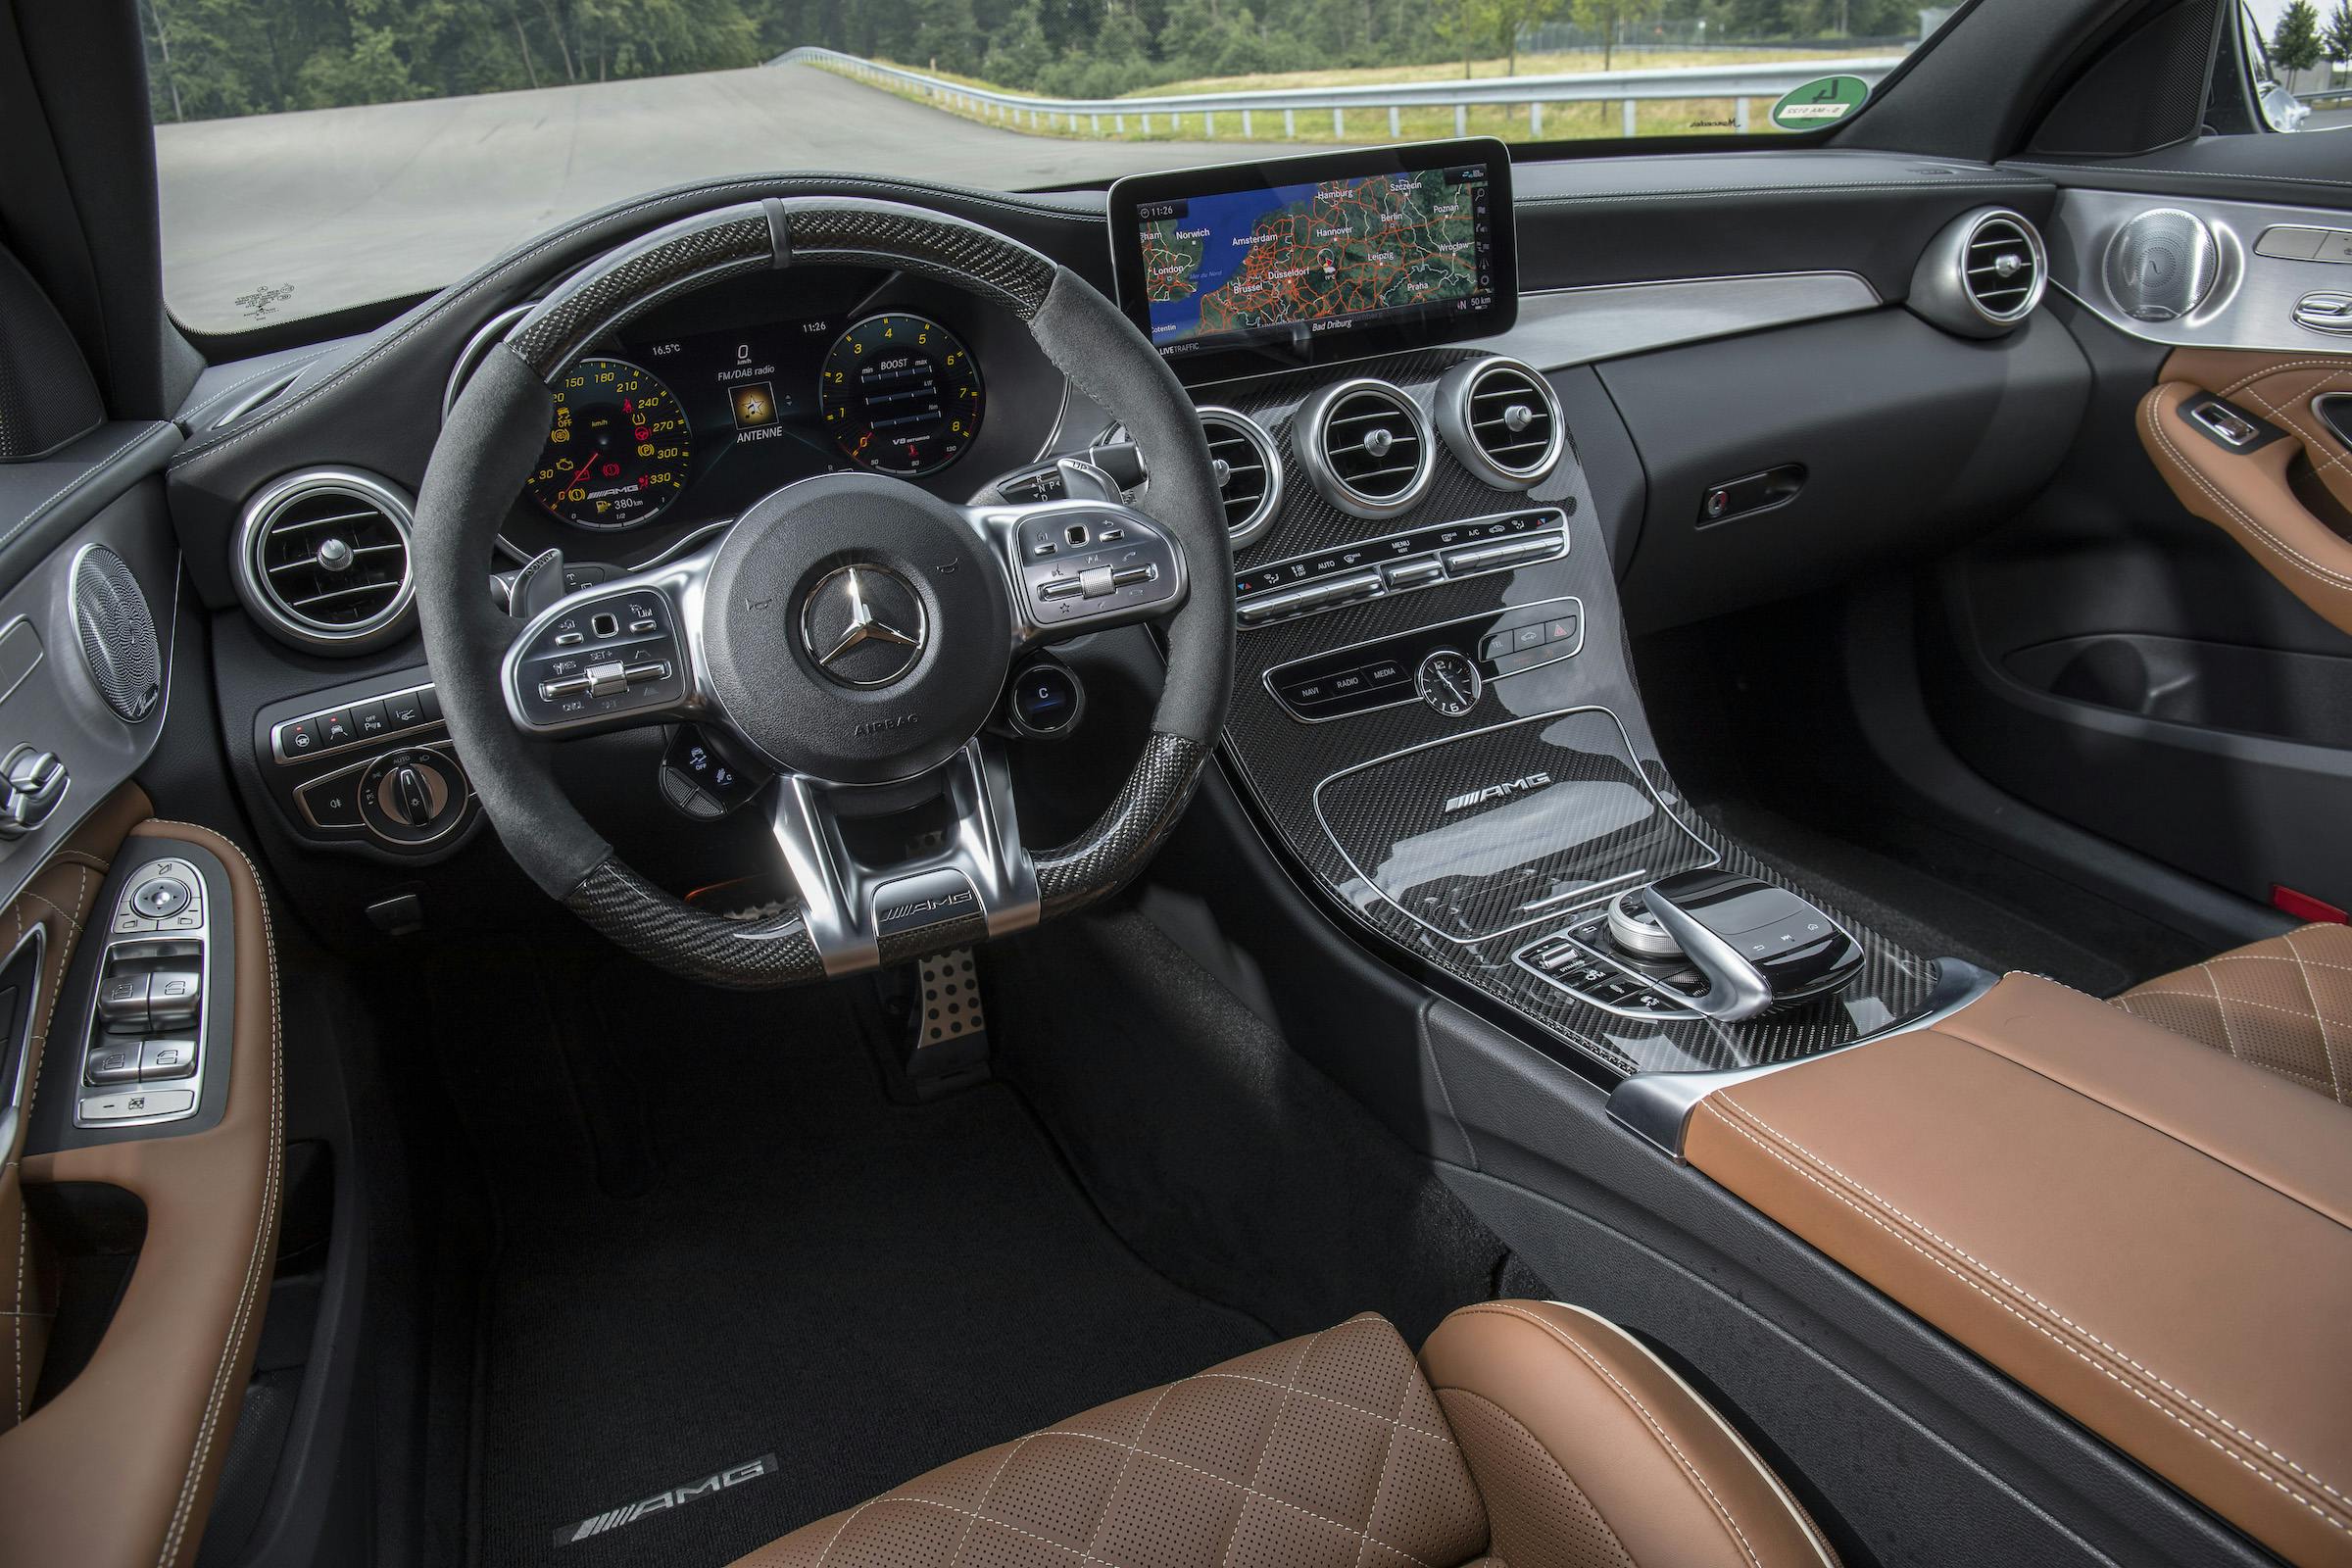 Mercedes-AMG C63 interior front